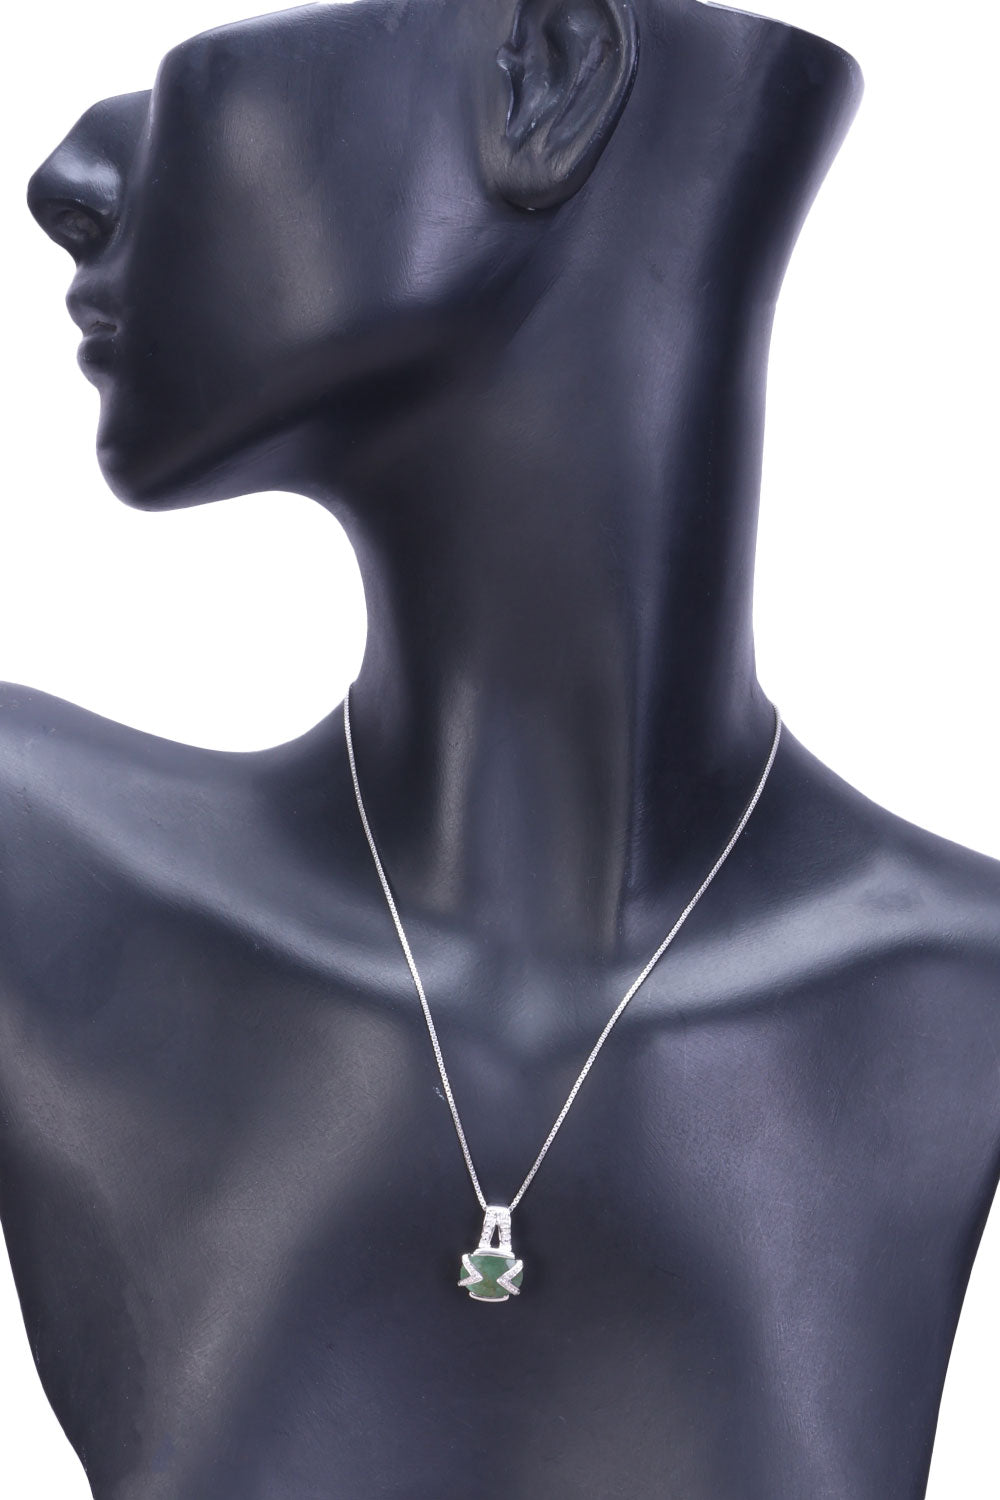 Emerald Silver Necklace Pendant Chain 10067185 - Avishya